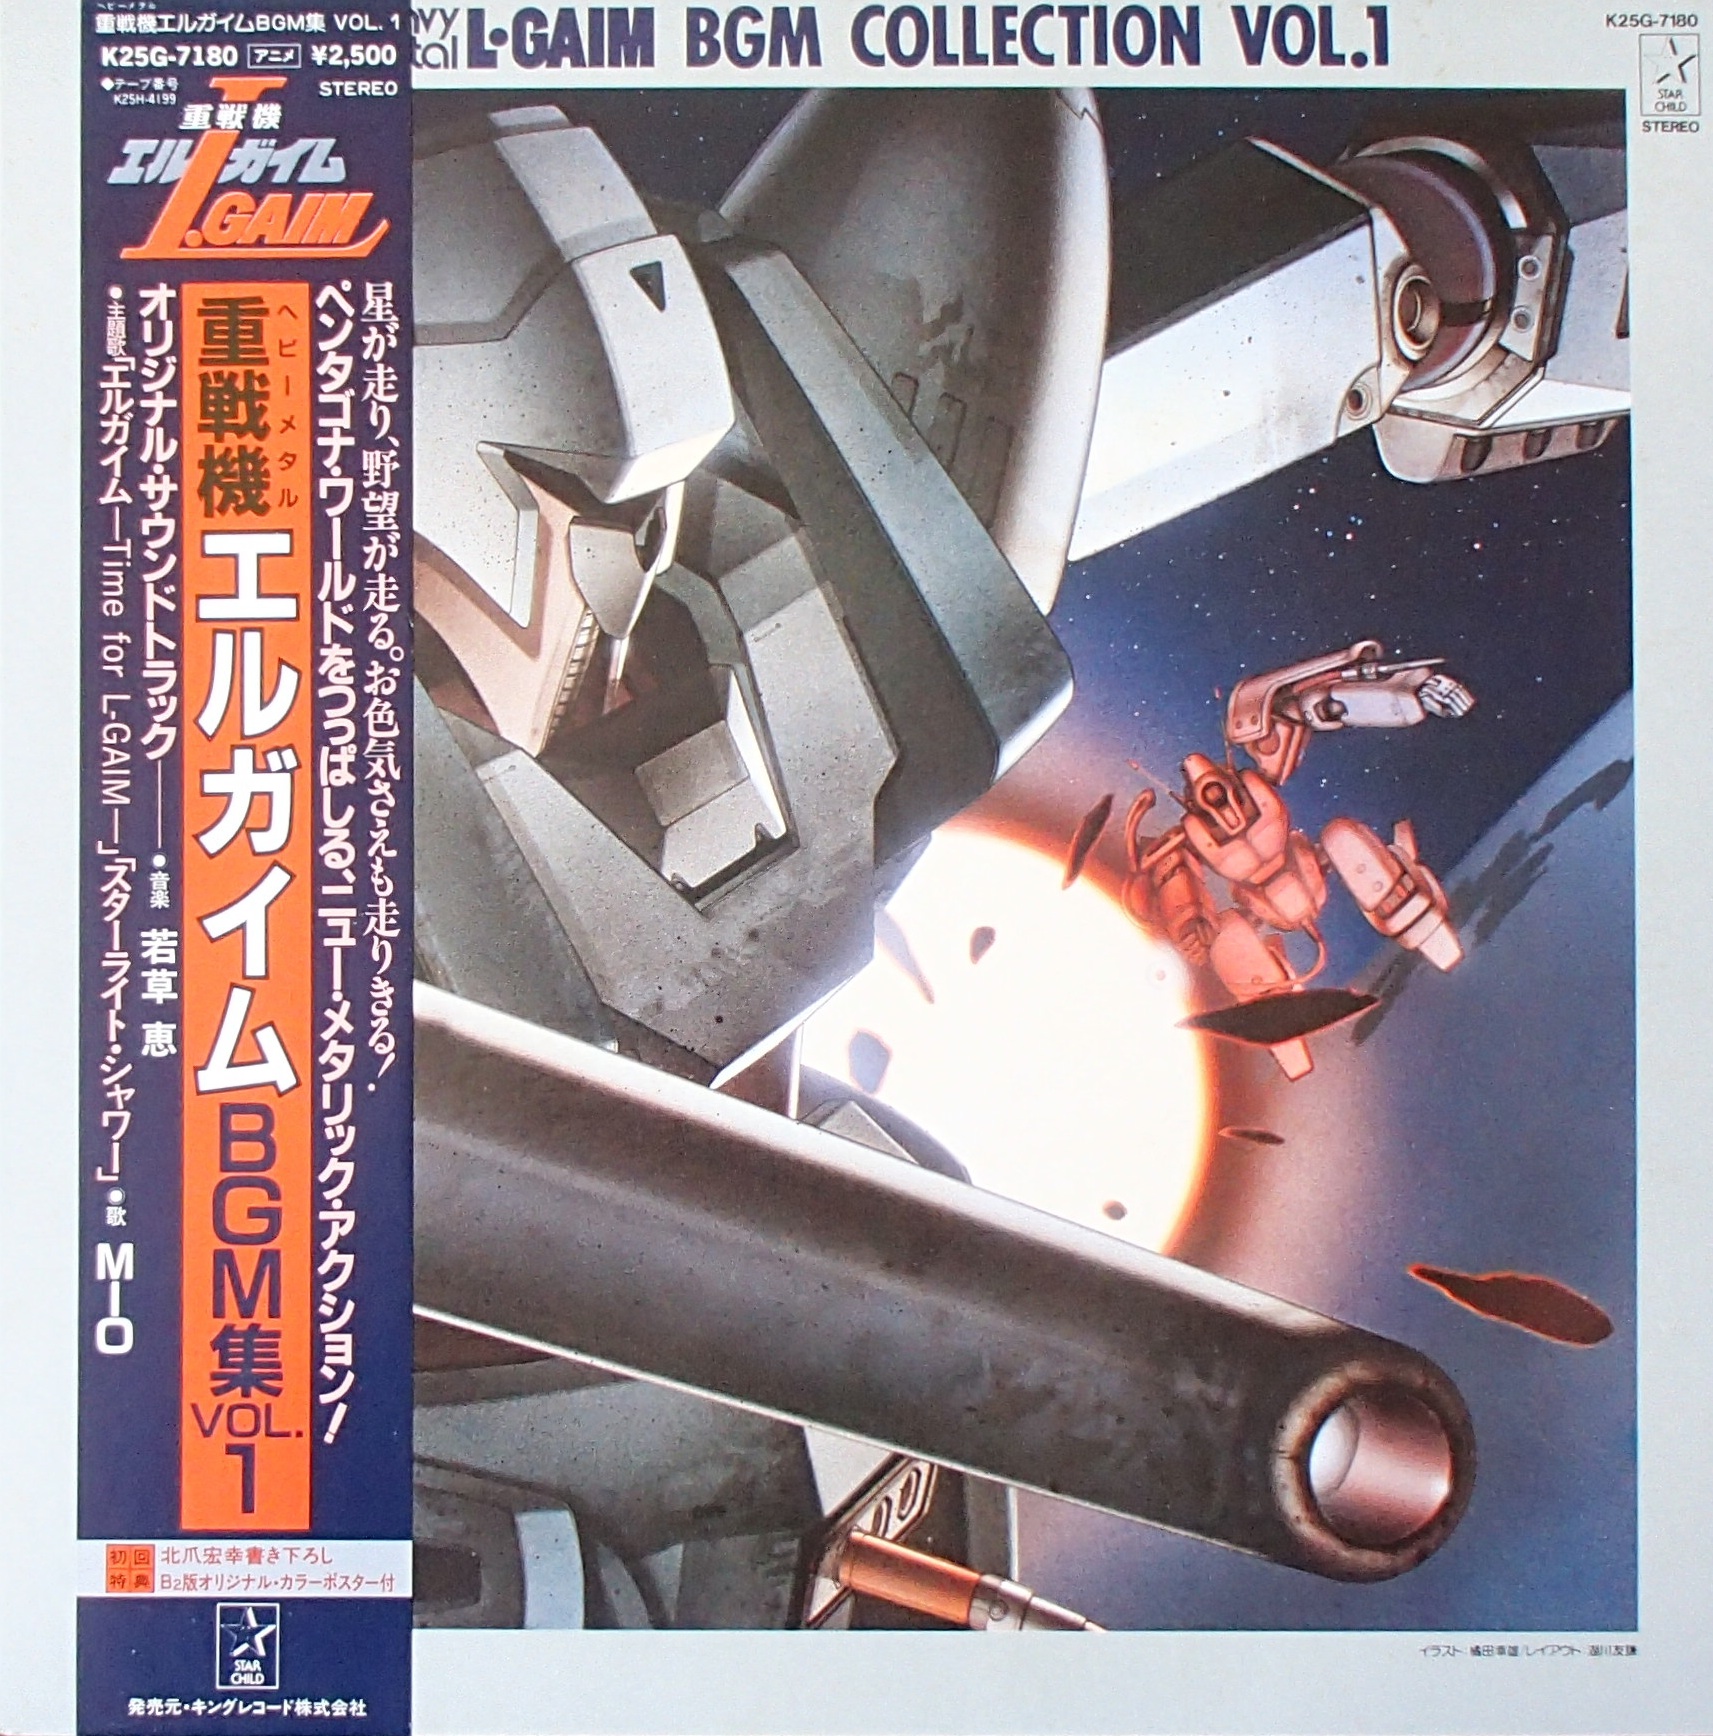 Heavy Metal L Gaim Bgm Collection Vol 1 Original Soundtrack Buy It Online At The Soundtrack To Your Life